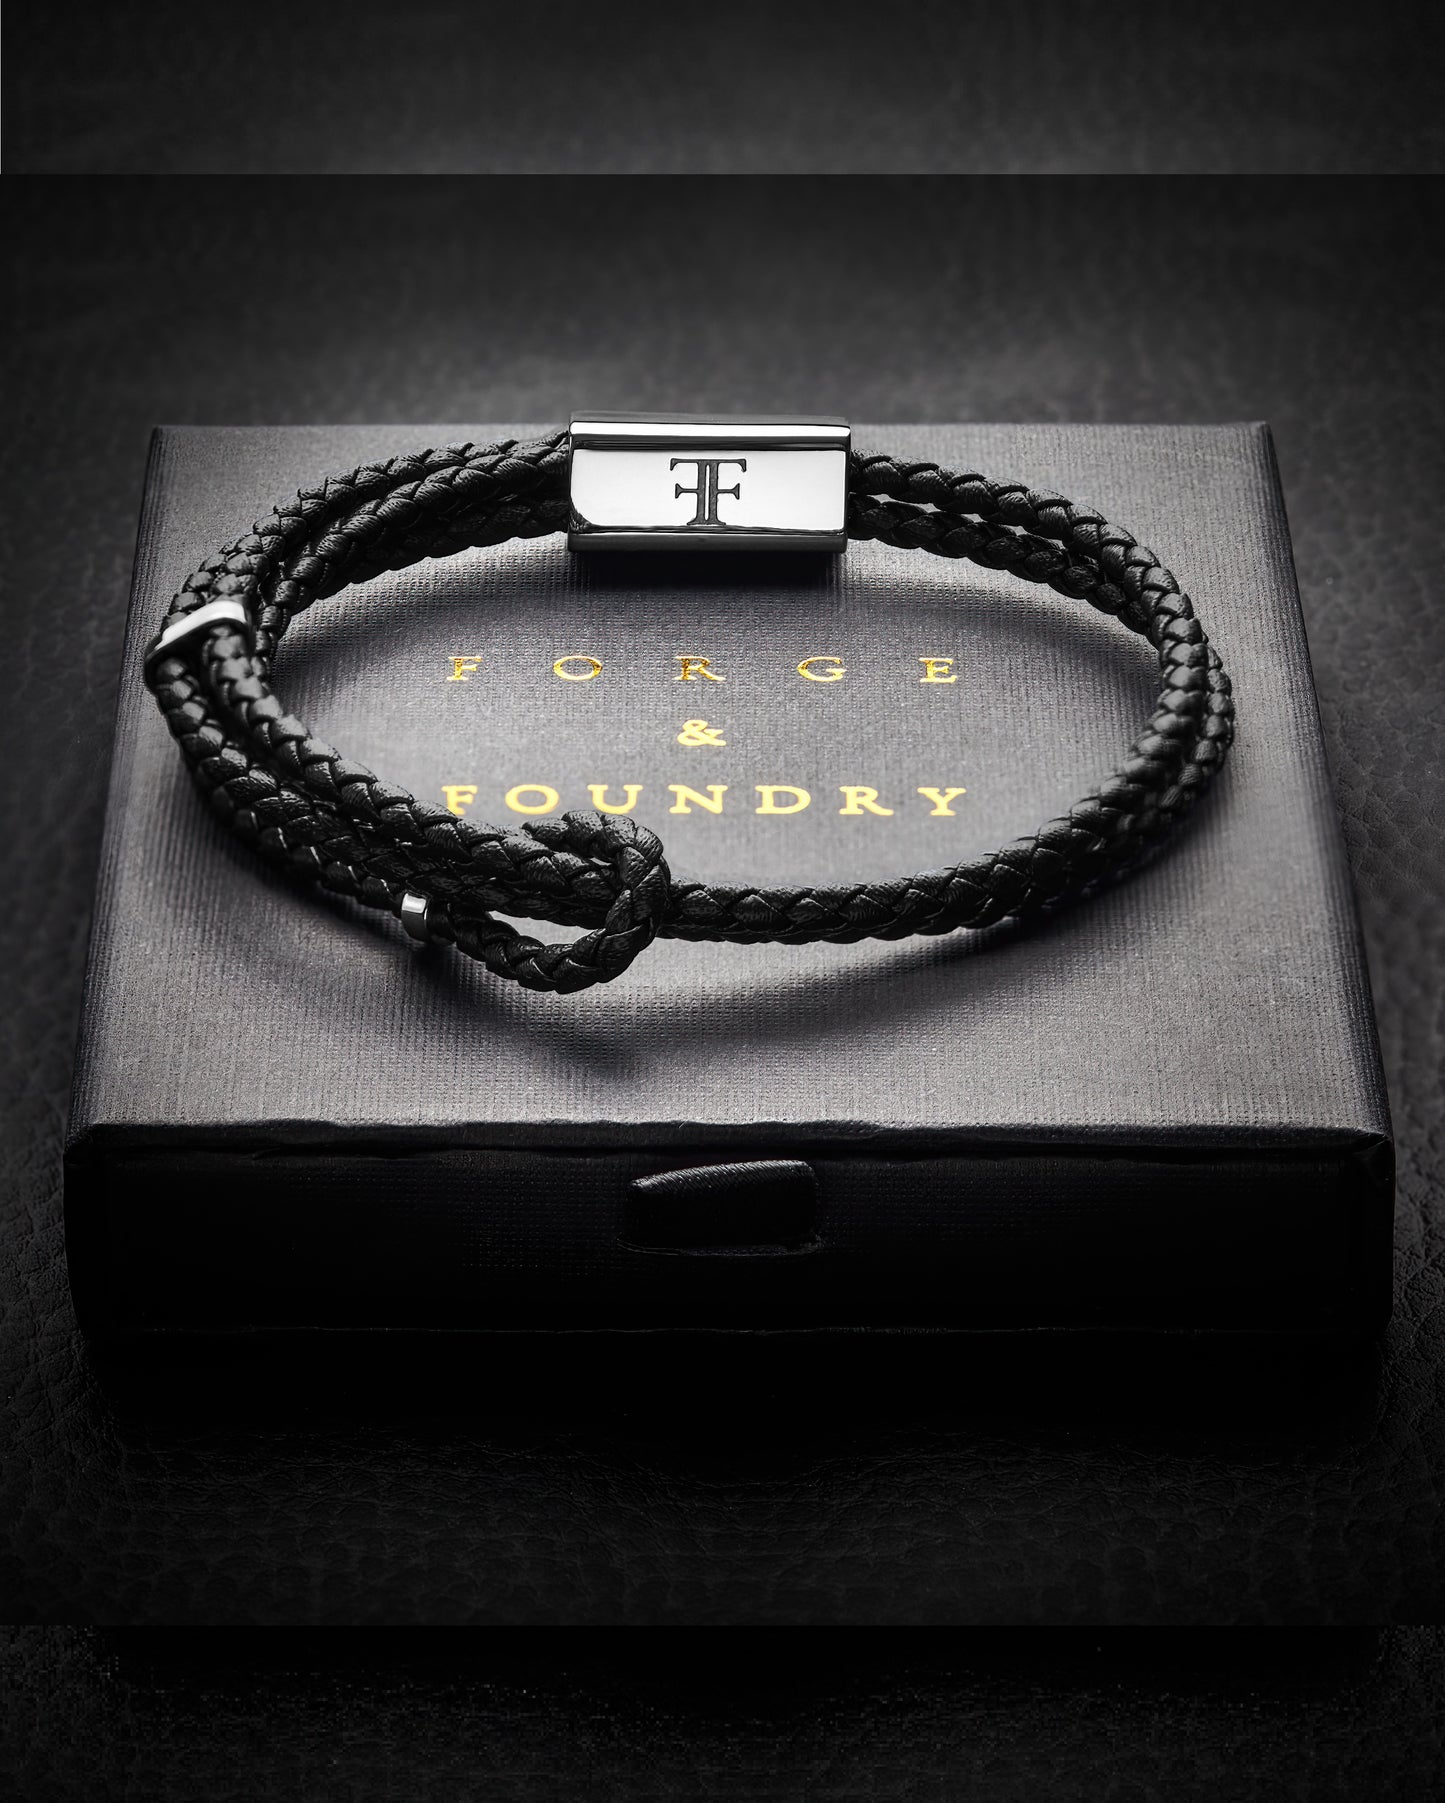 Leather Bracelet "DRAYTON" [Black/Silver]